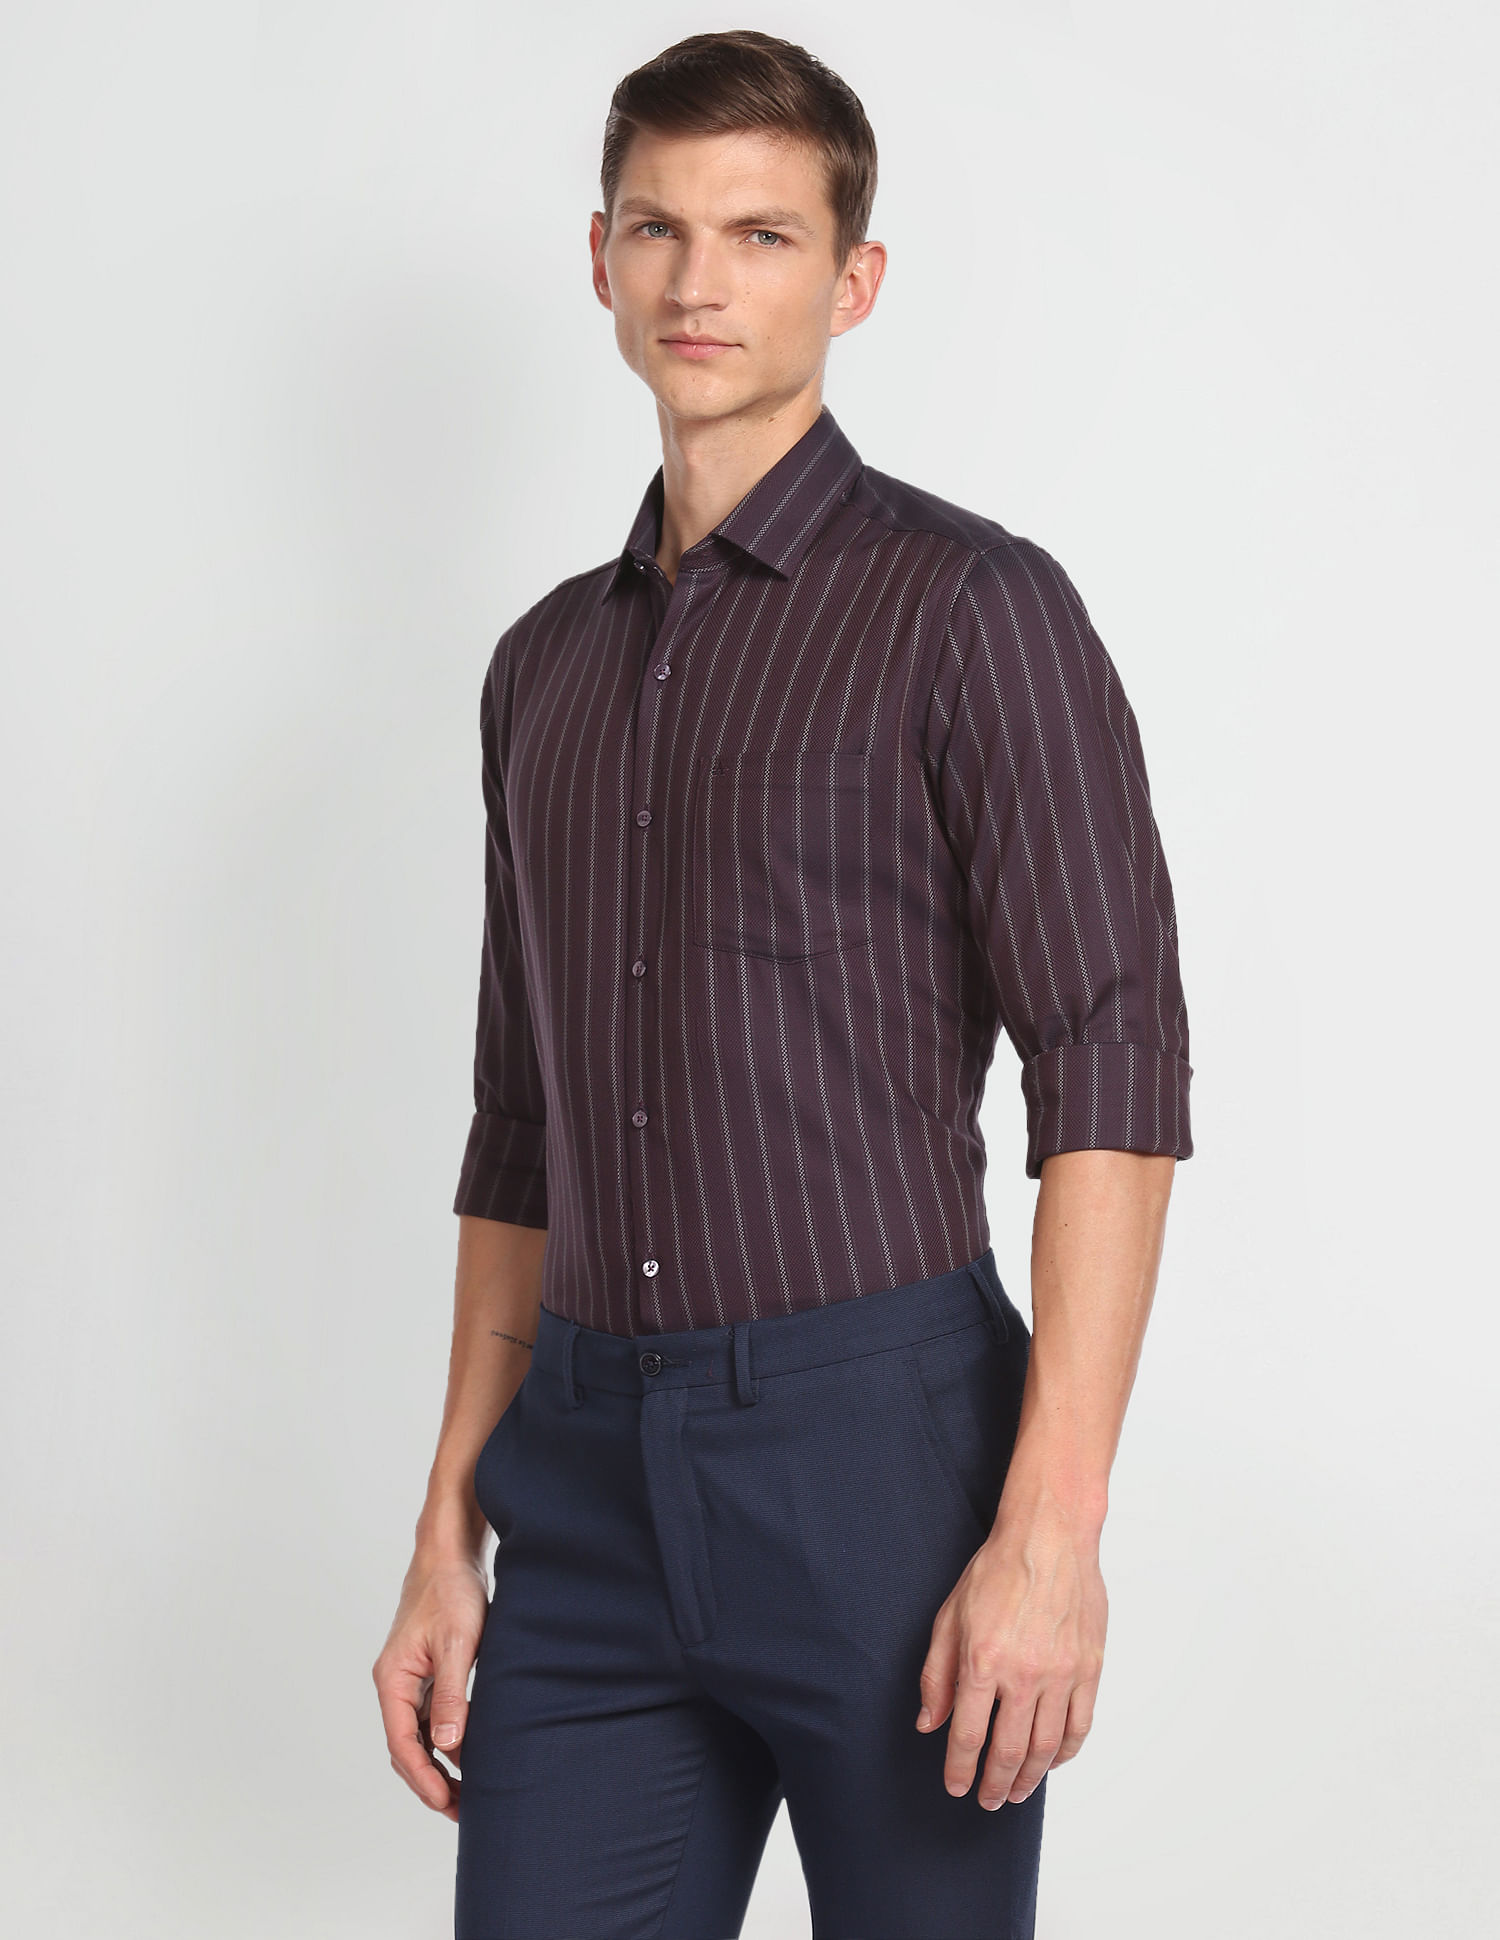 Cutaway Collar Vertical Stripe Formal Shirt